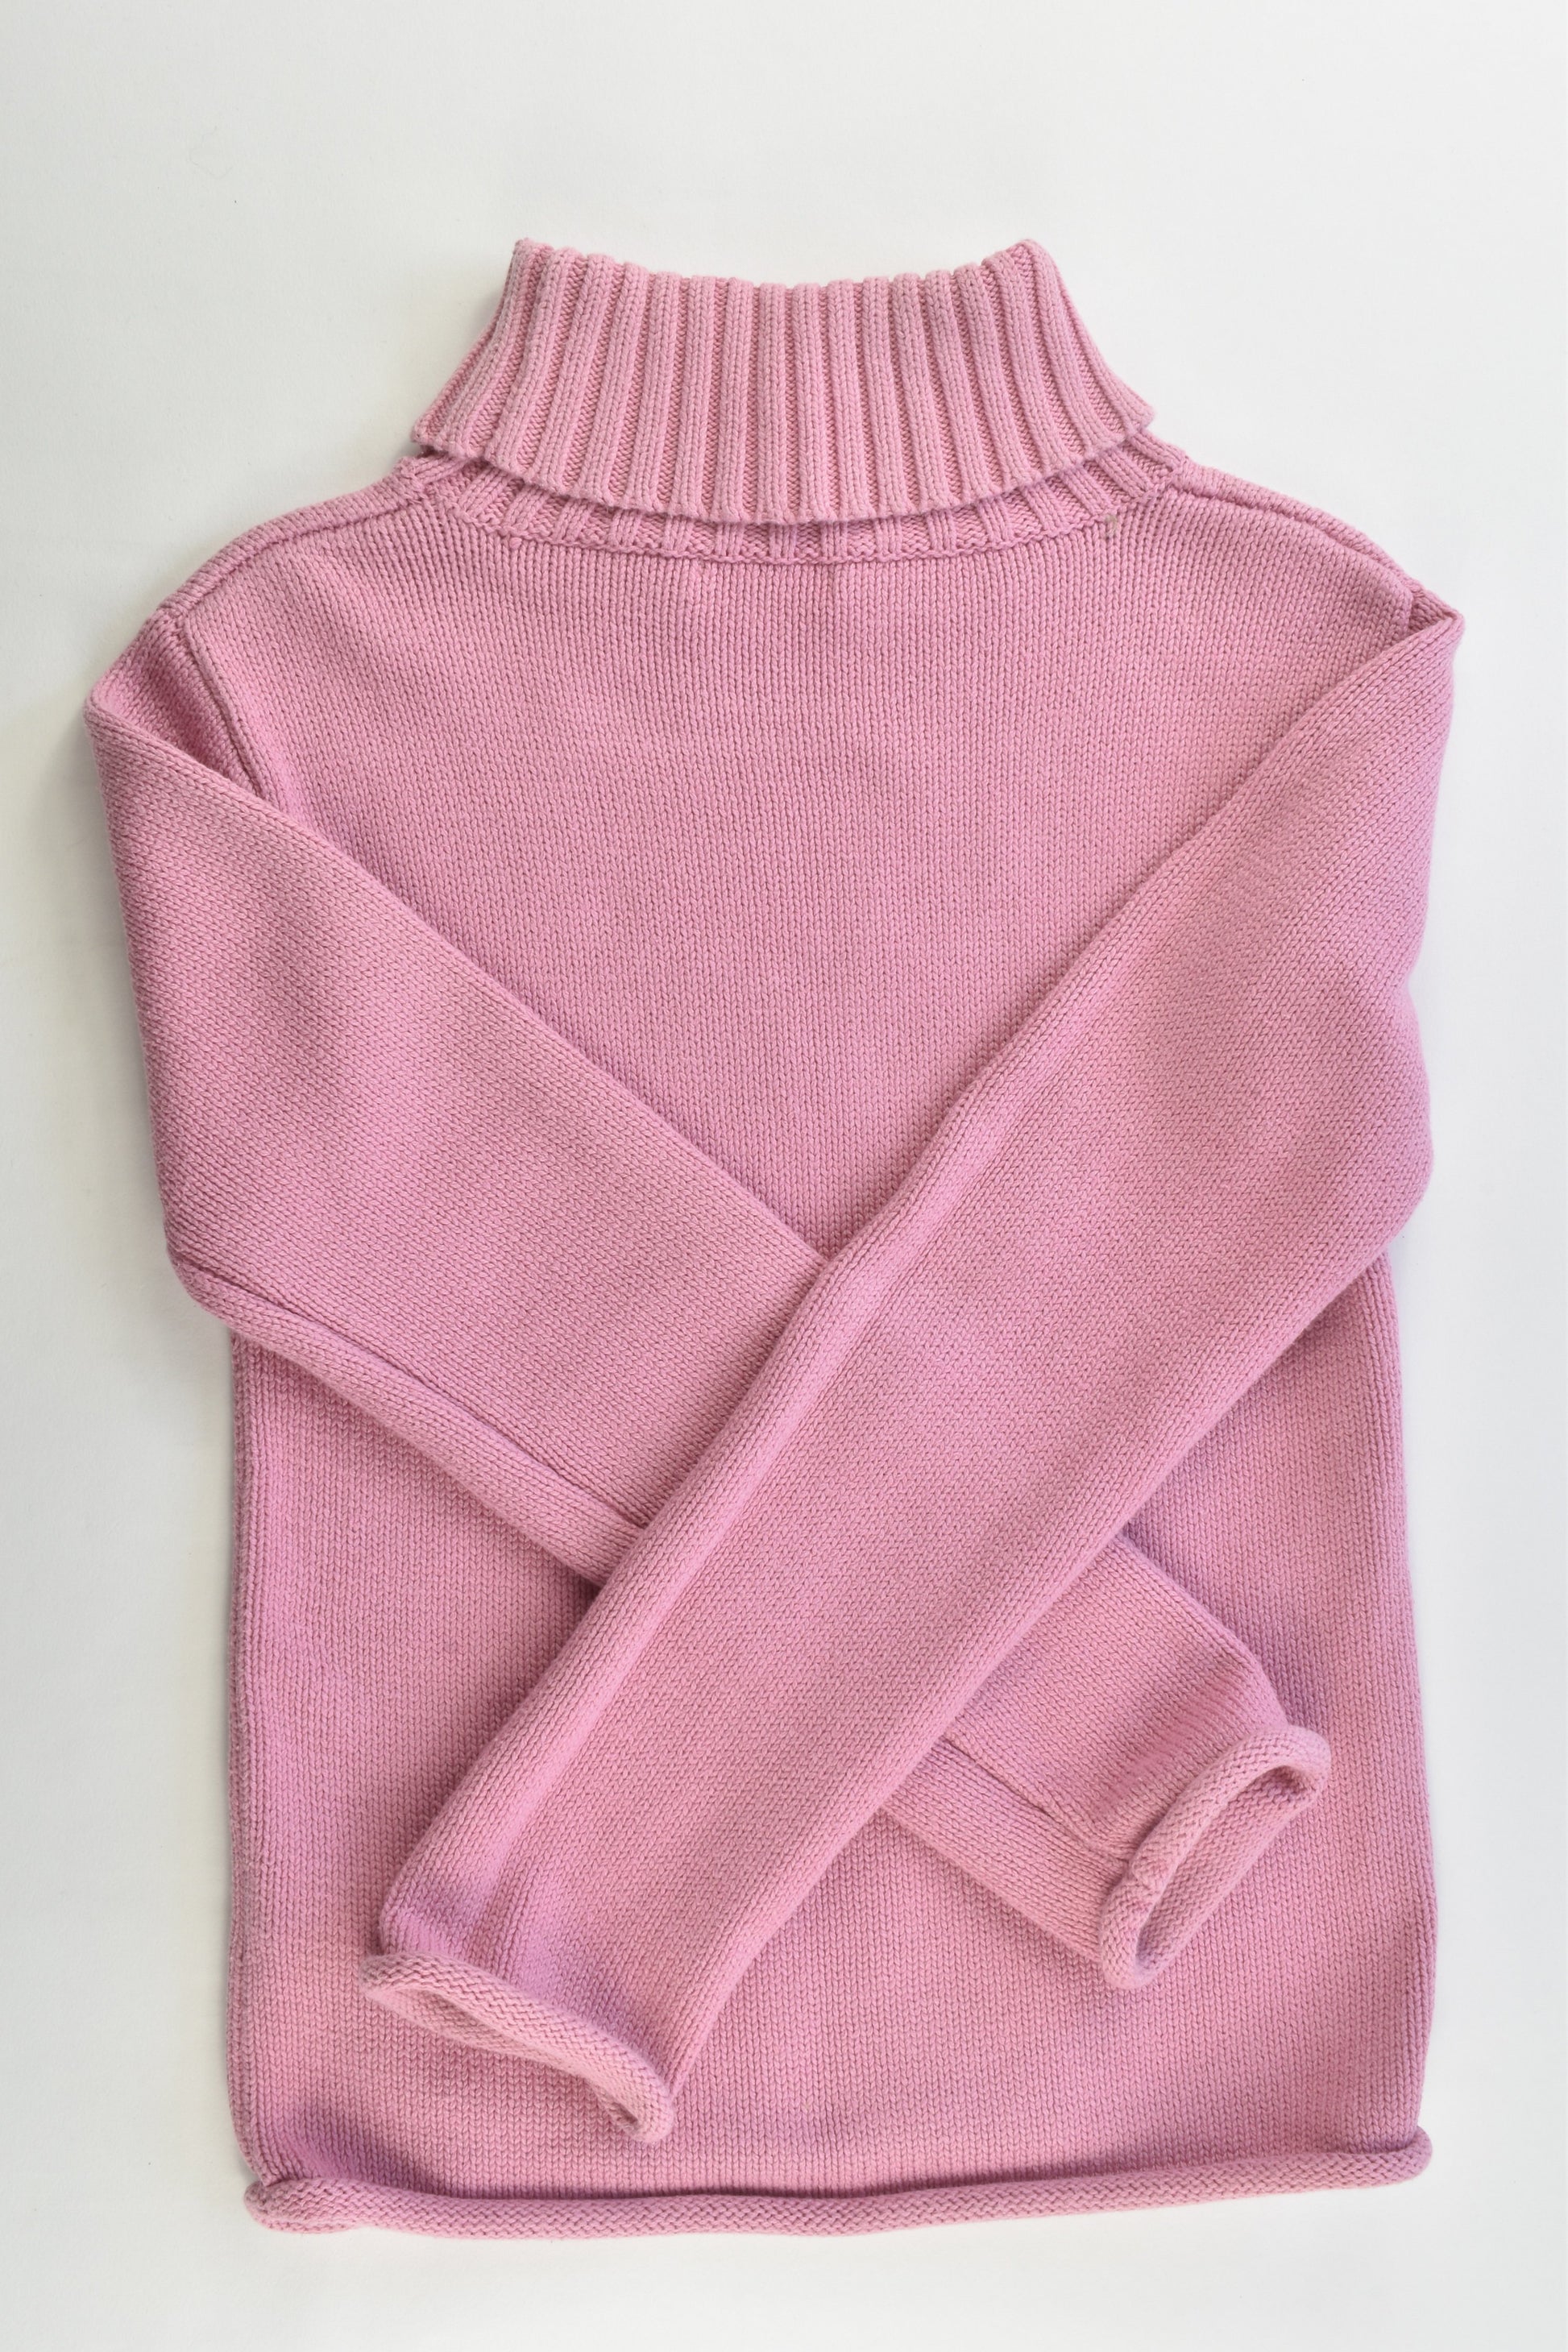 Okaïdi (France) Size 8 Knitted Polo Neck Jumper